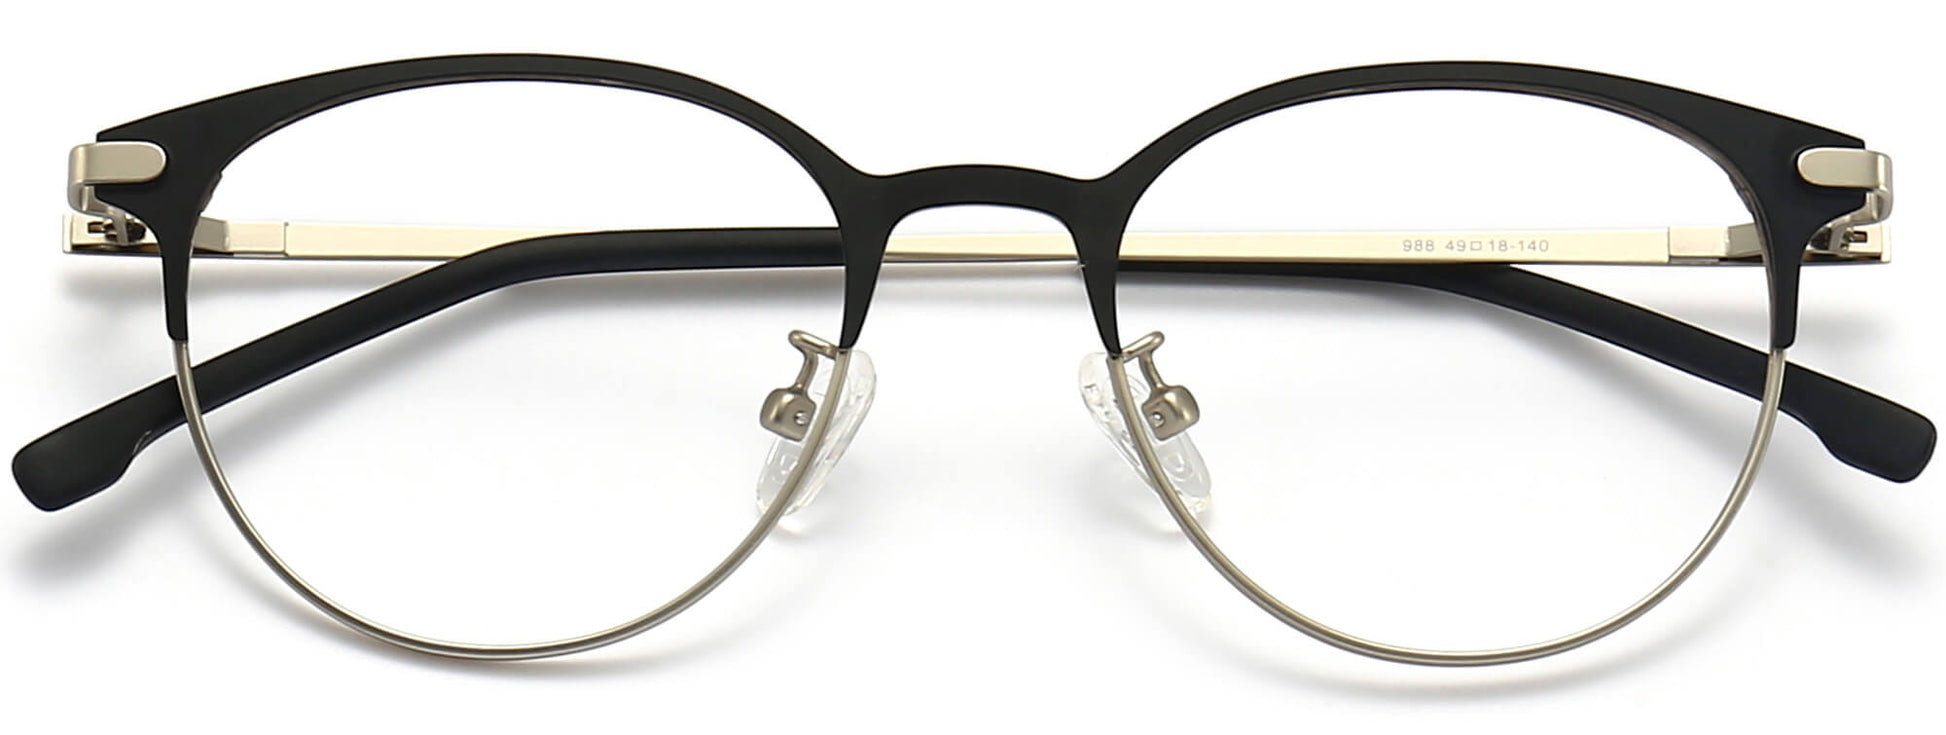 Julio Round Black Eyeglasses rom ANRRI, closed view